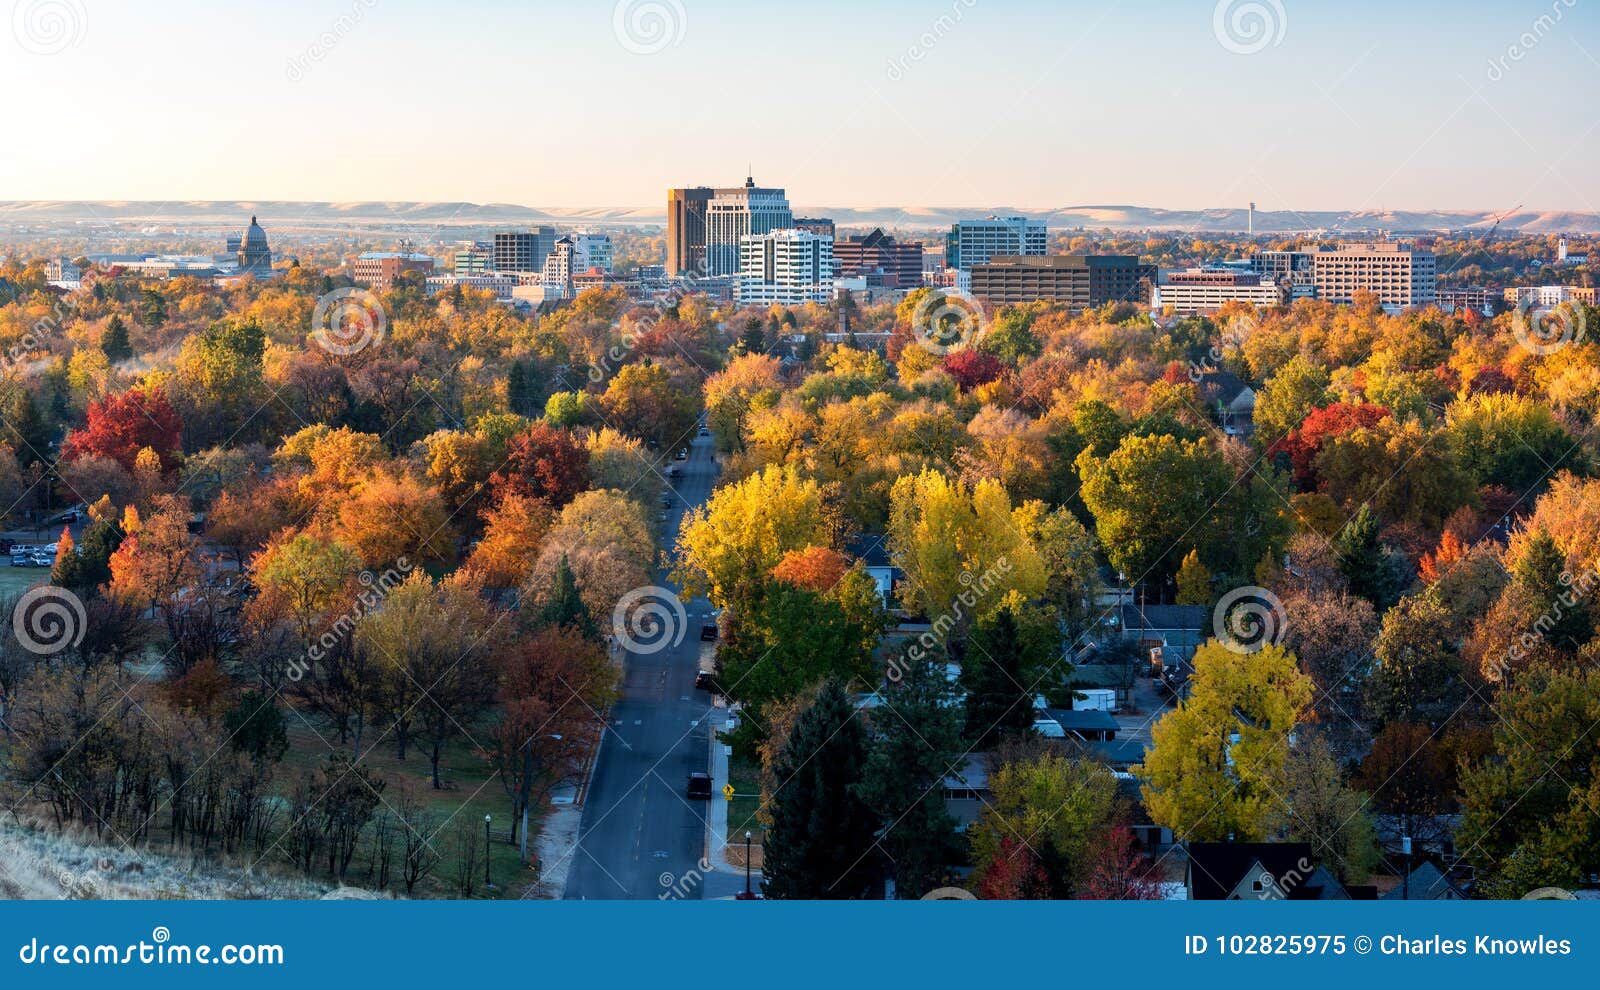 city of trees boise idaho skyline in full fall color